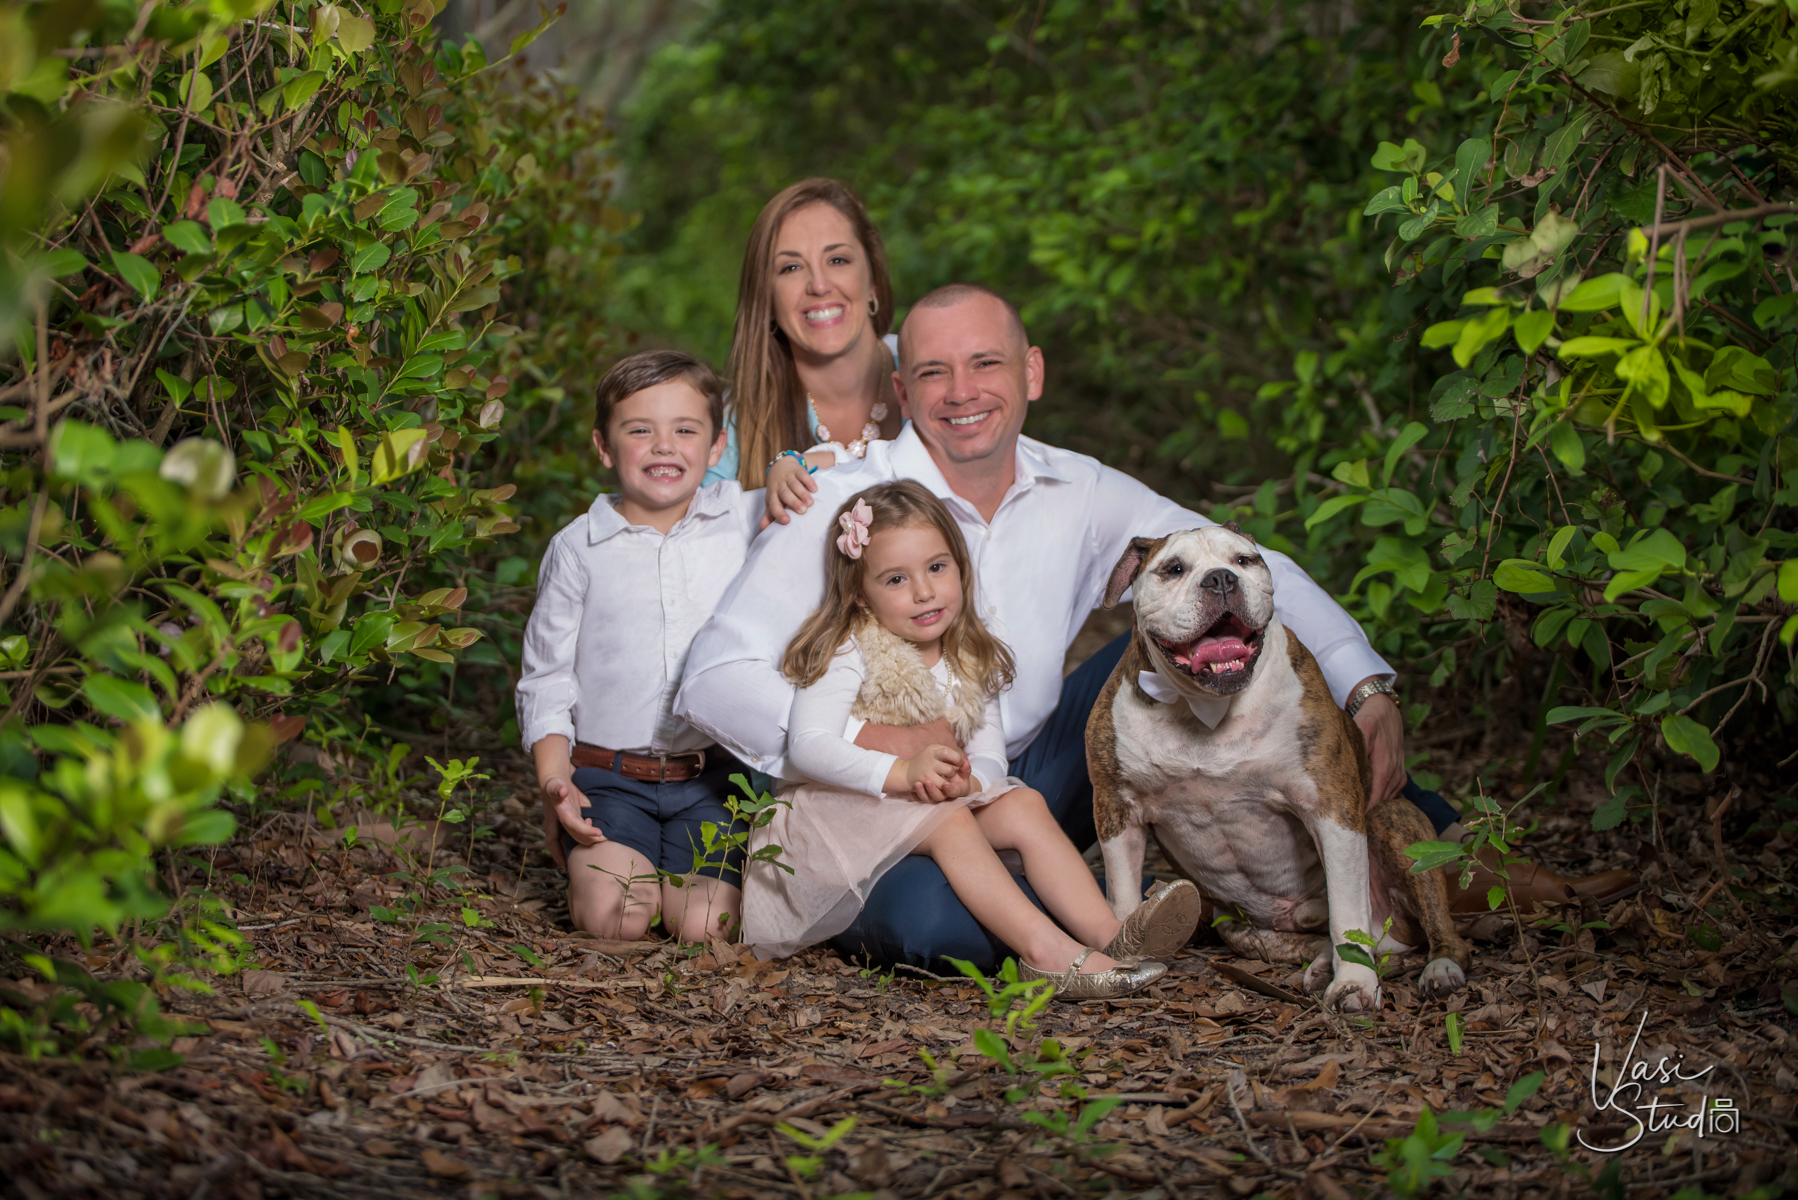 Seasonal family photo sessions available from Vasi Siedman.